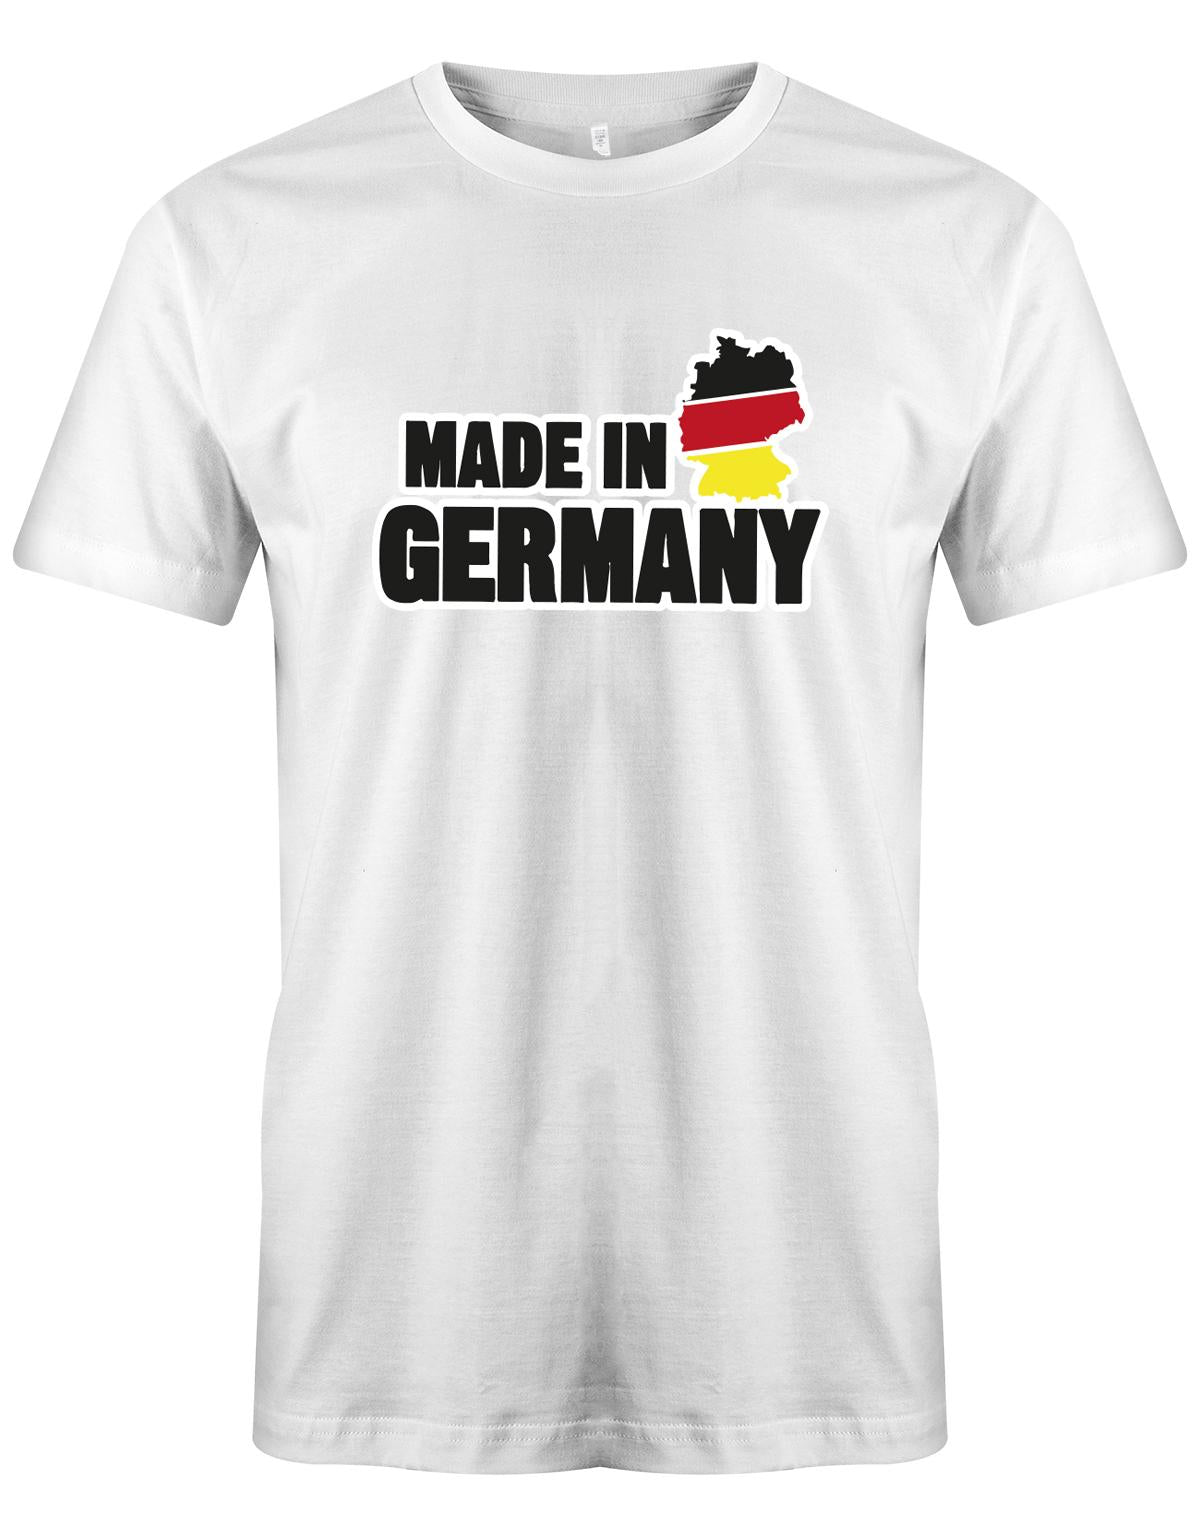 MAde-in-germany-Herren-Shirt-Weis